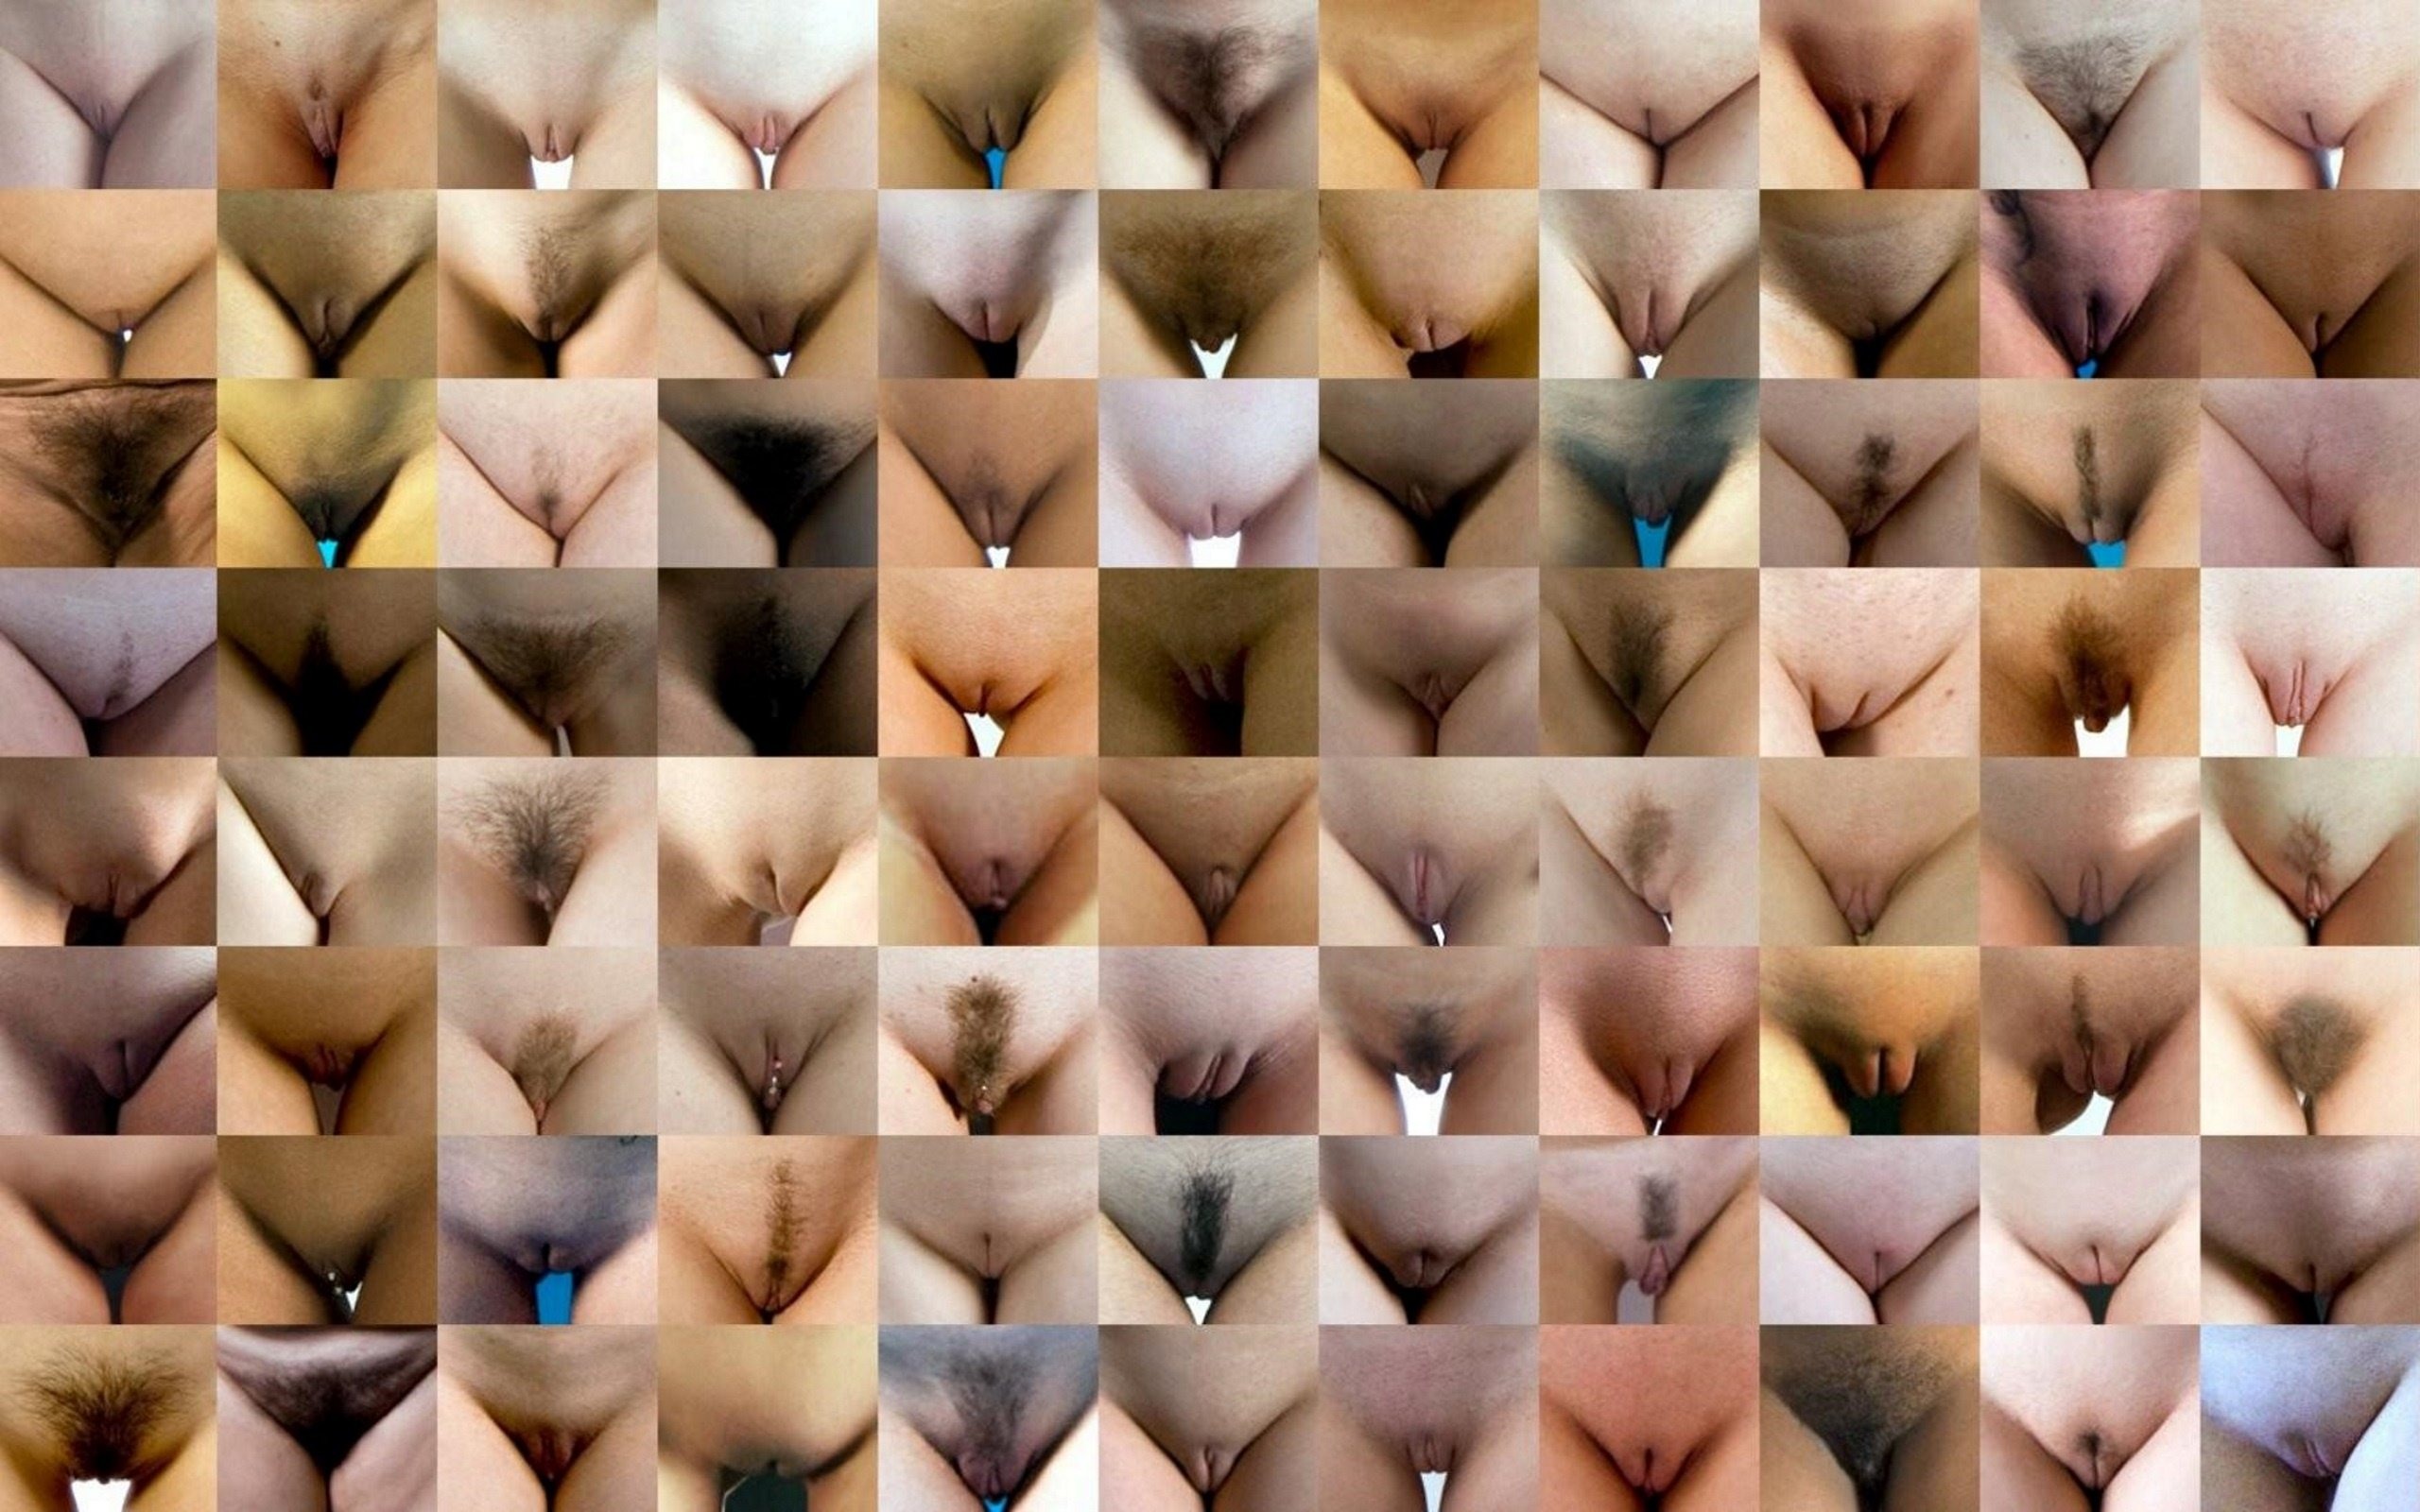 Разновидности женских писек - отличная подборка (120 photo)